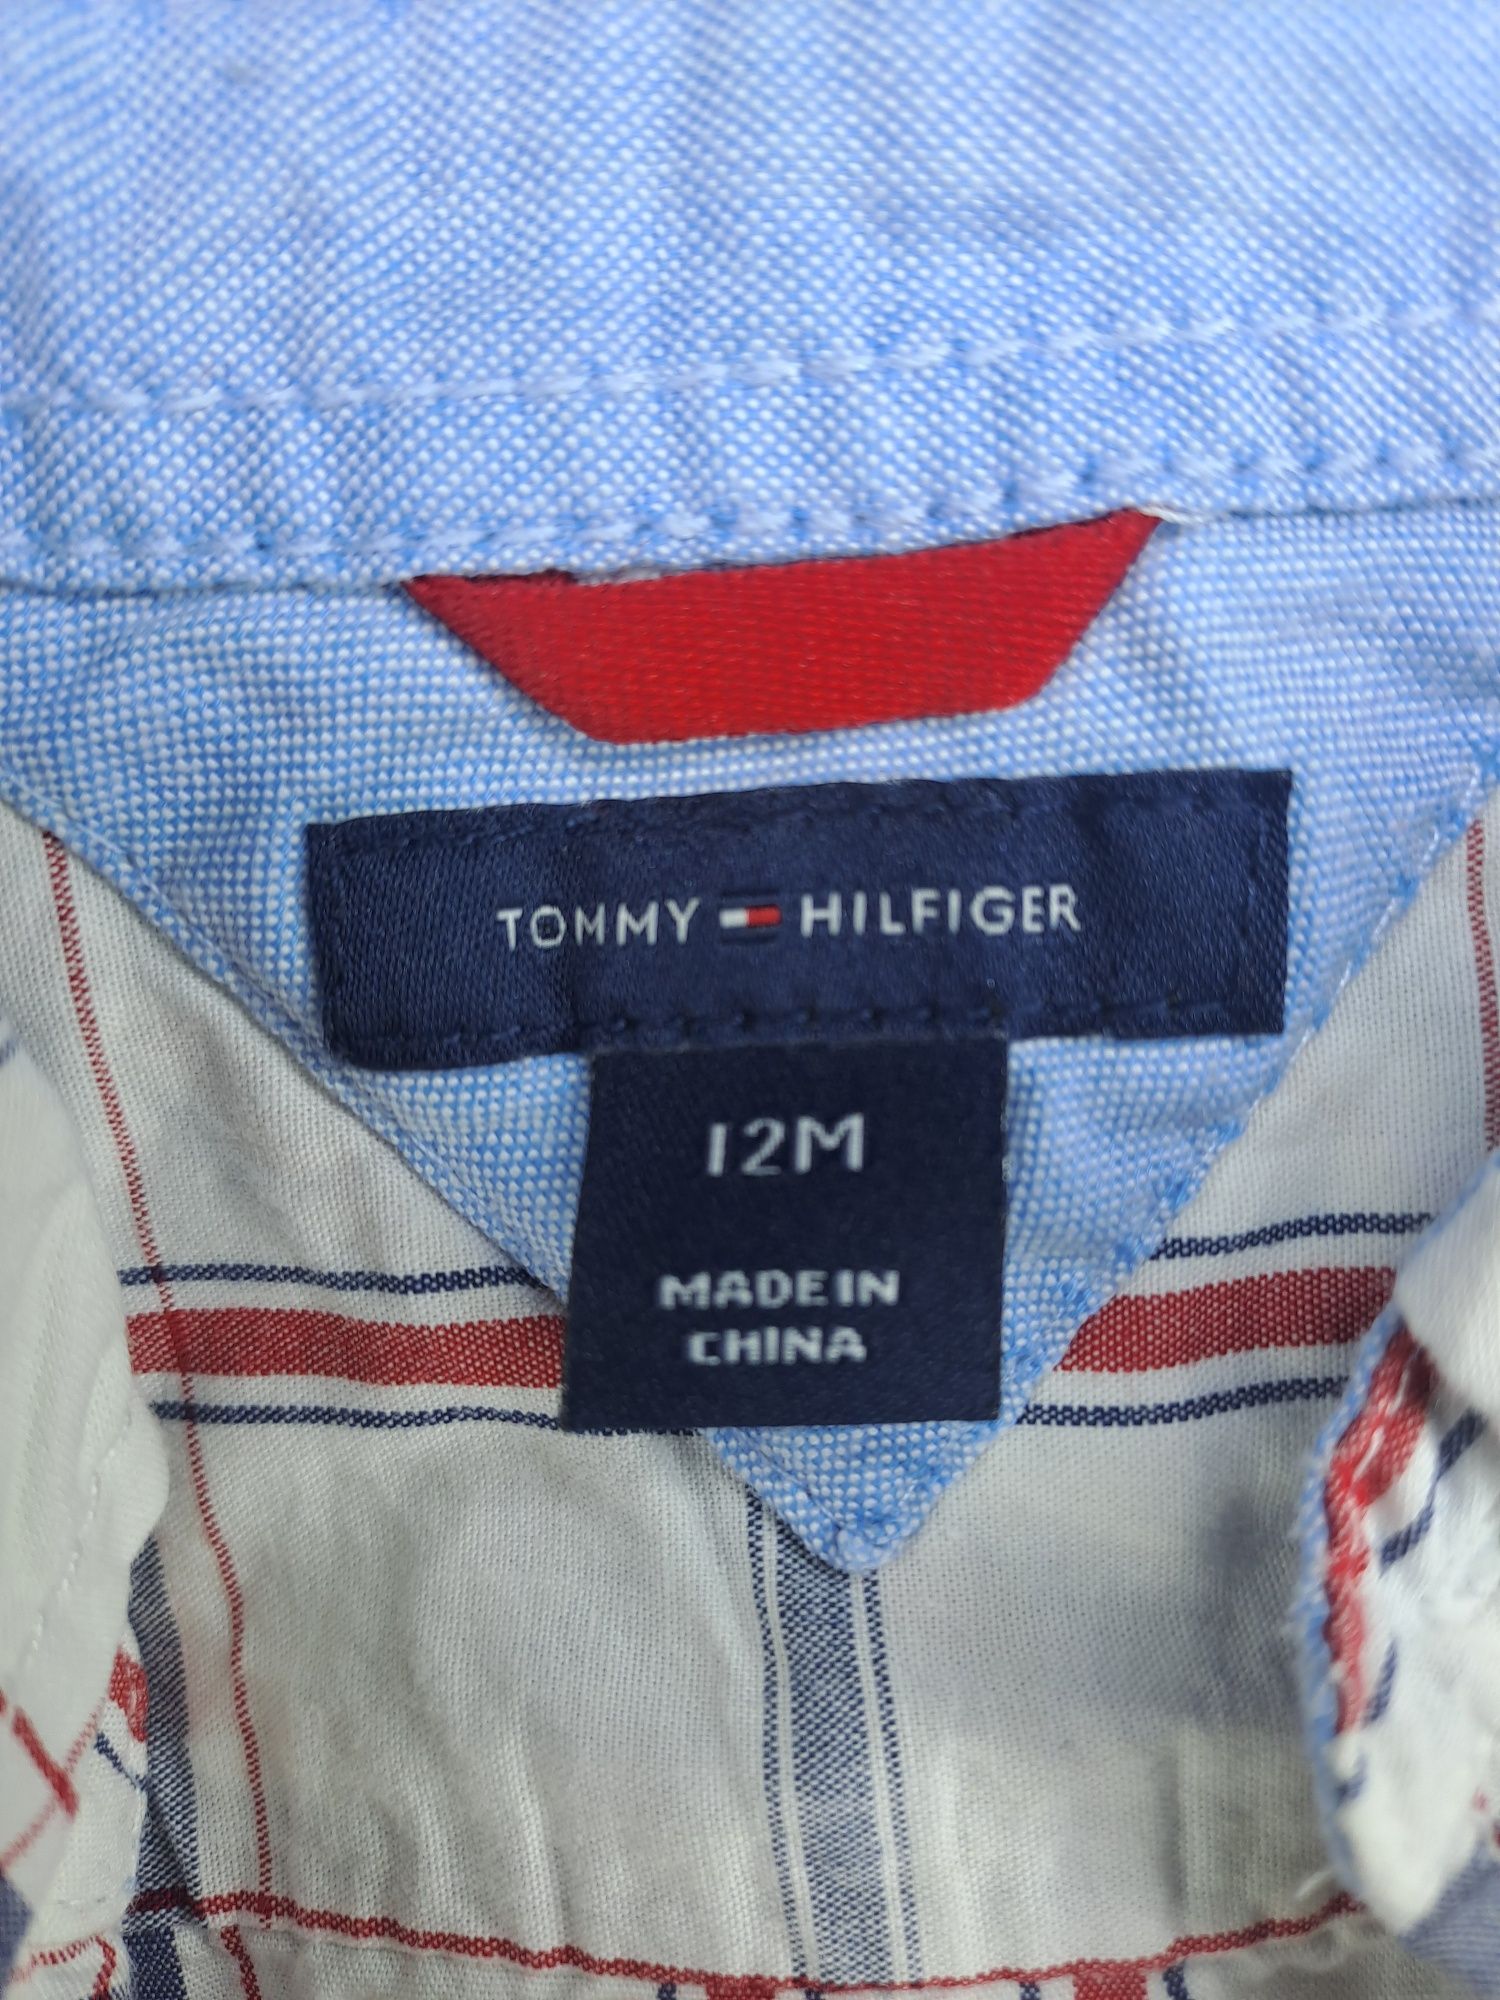 Tommy Hilfiger 12m koszula w krate